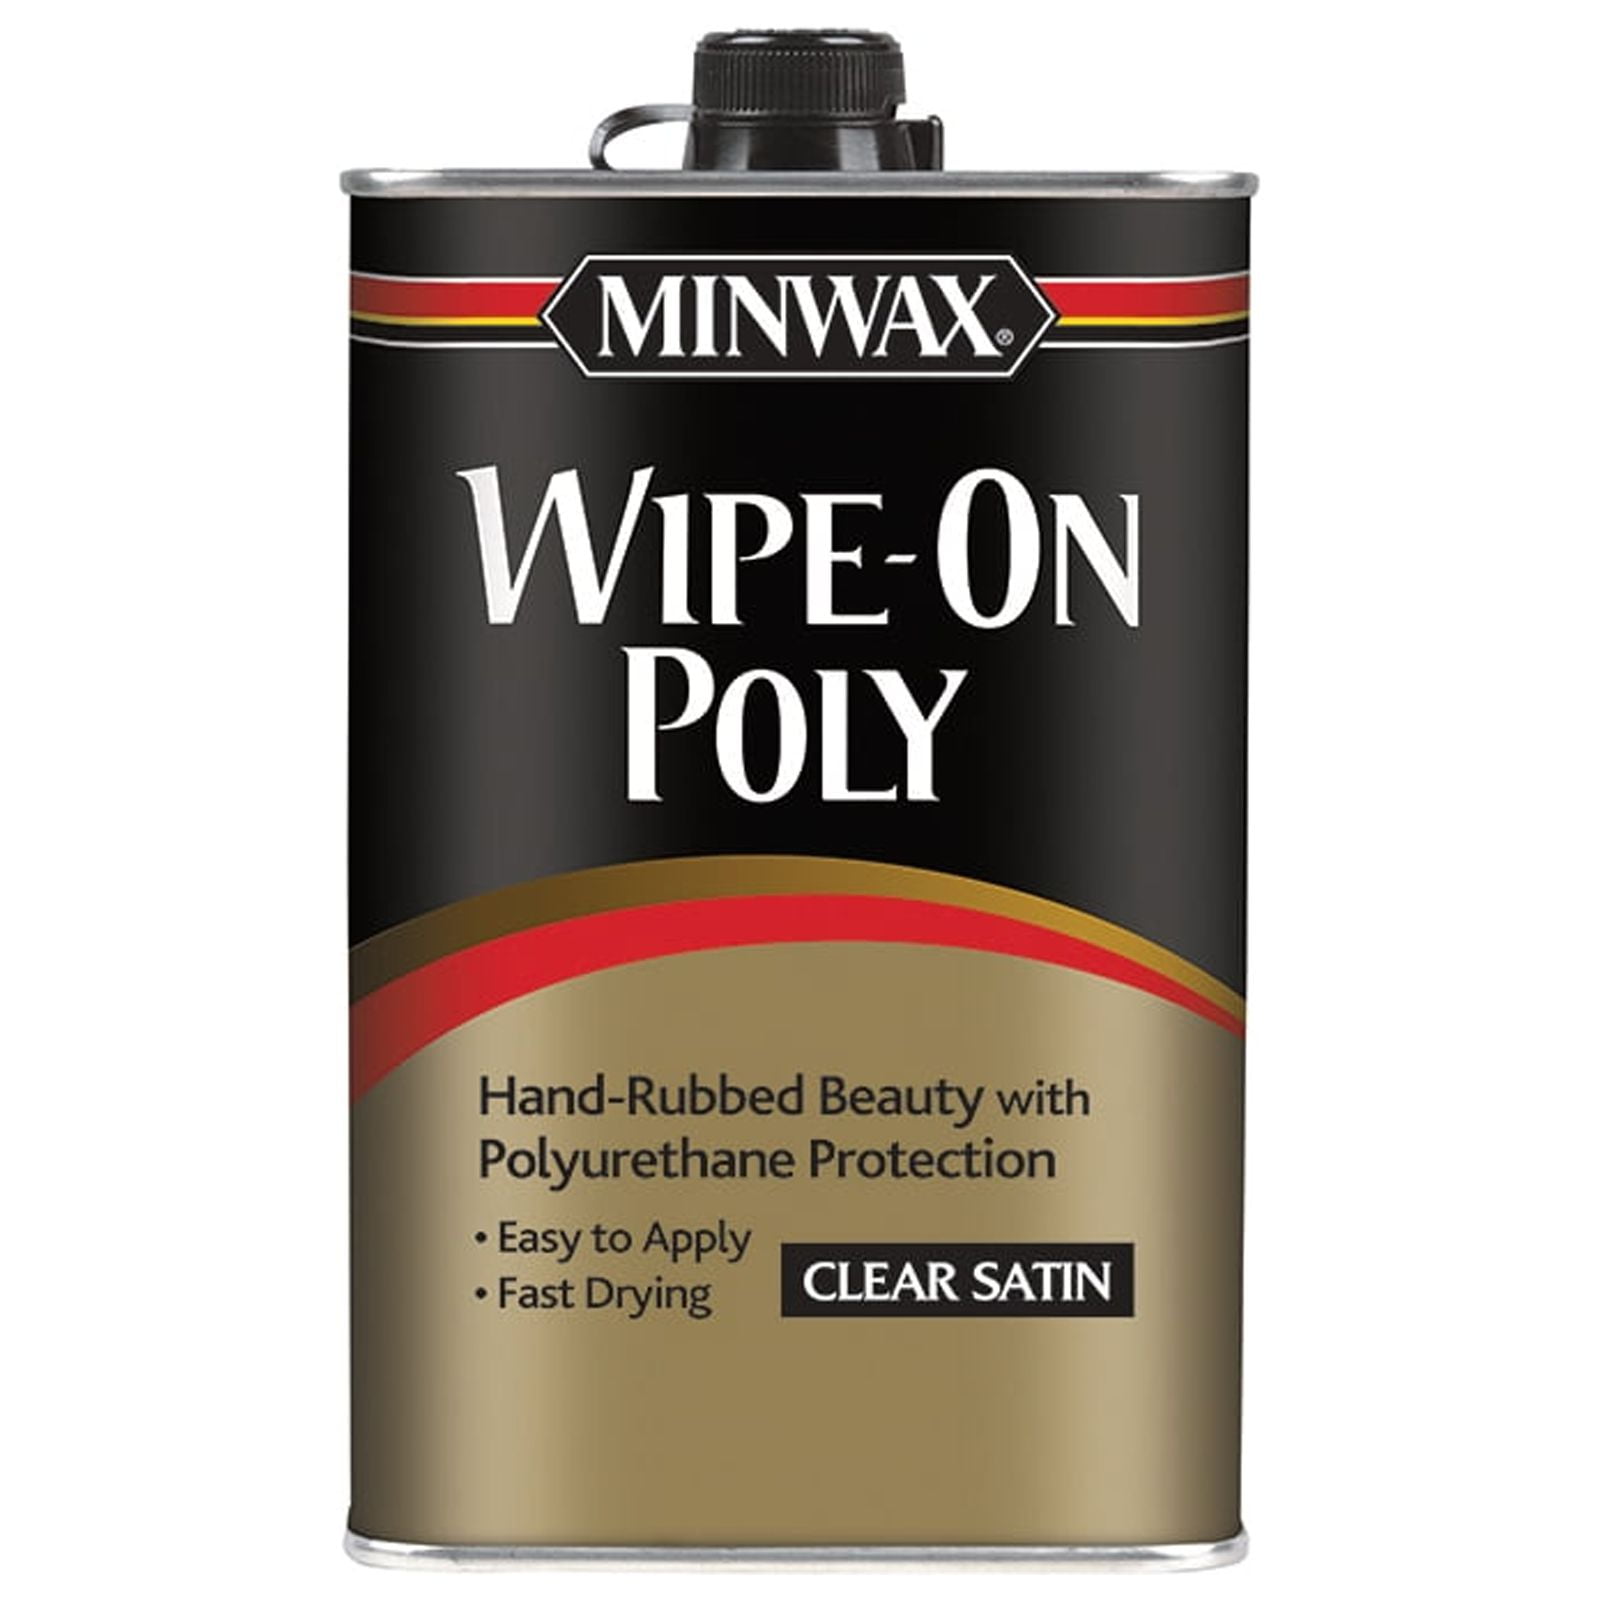 Minwax 622224444 Polycrylic Protective Finish 1 Quart Matte